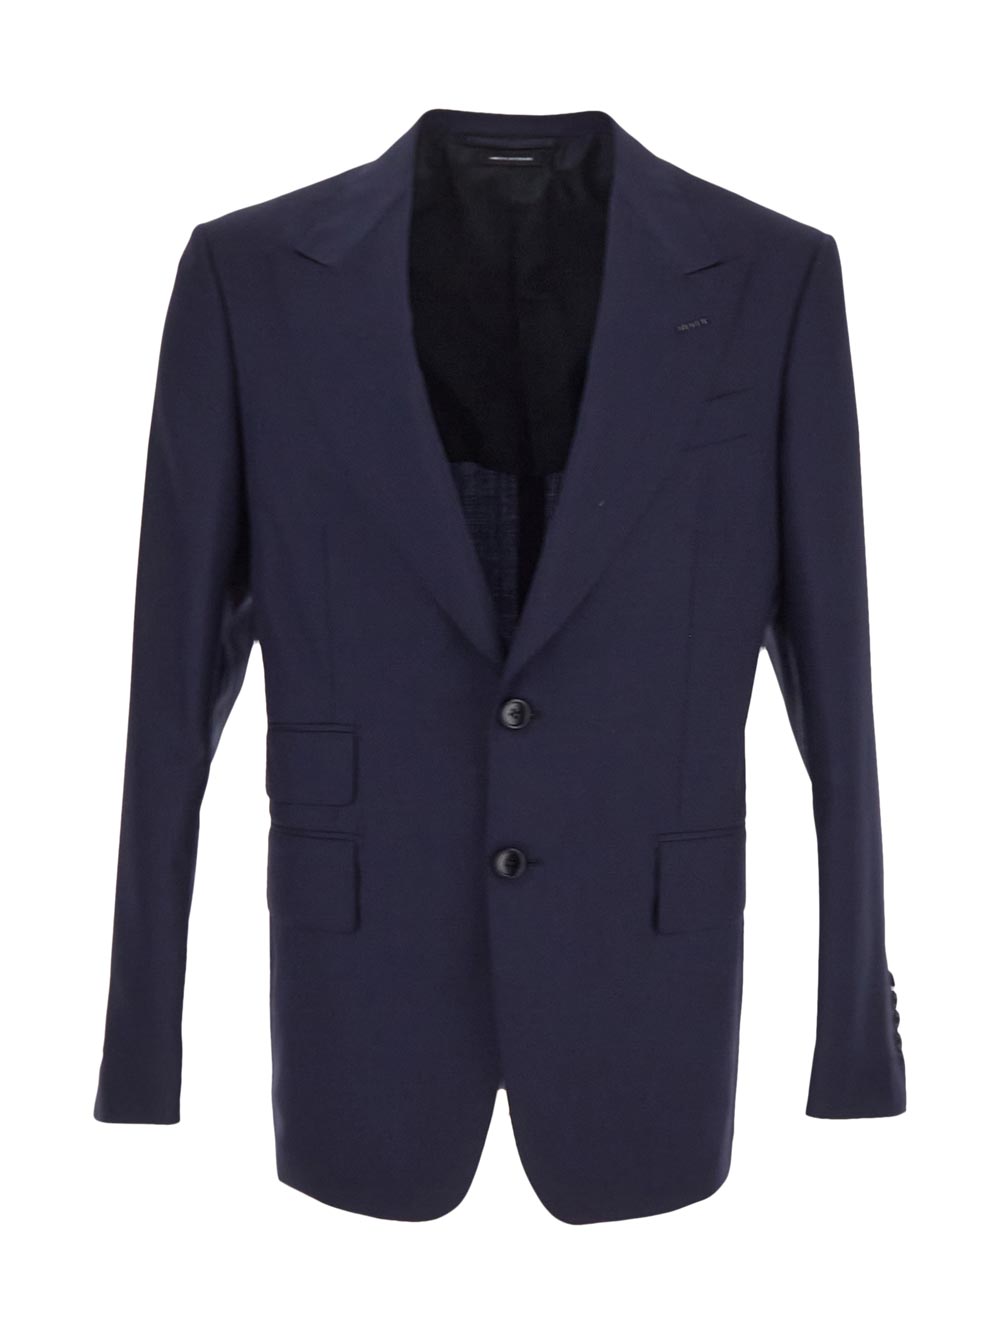 Tom Ford Fine Poplin Shelton Suit